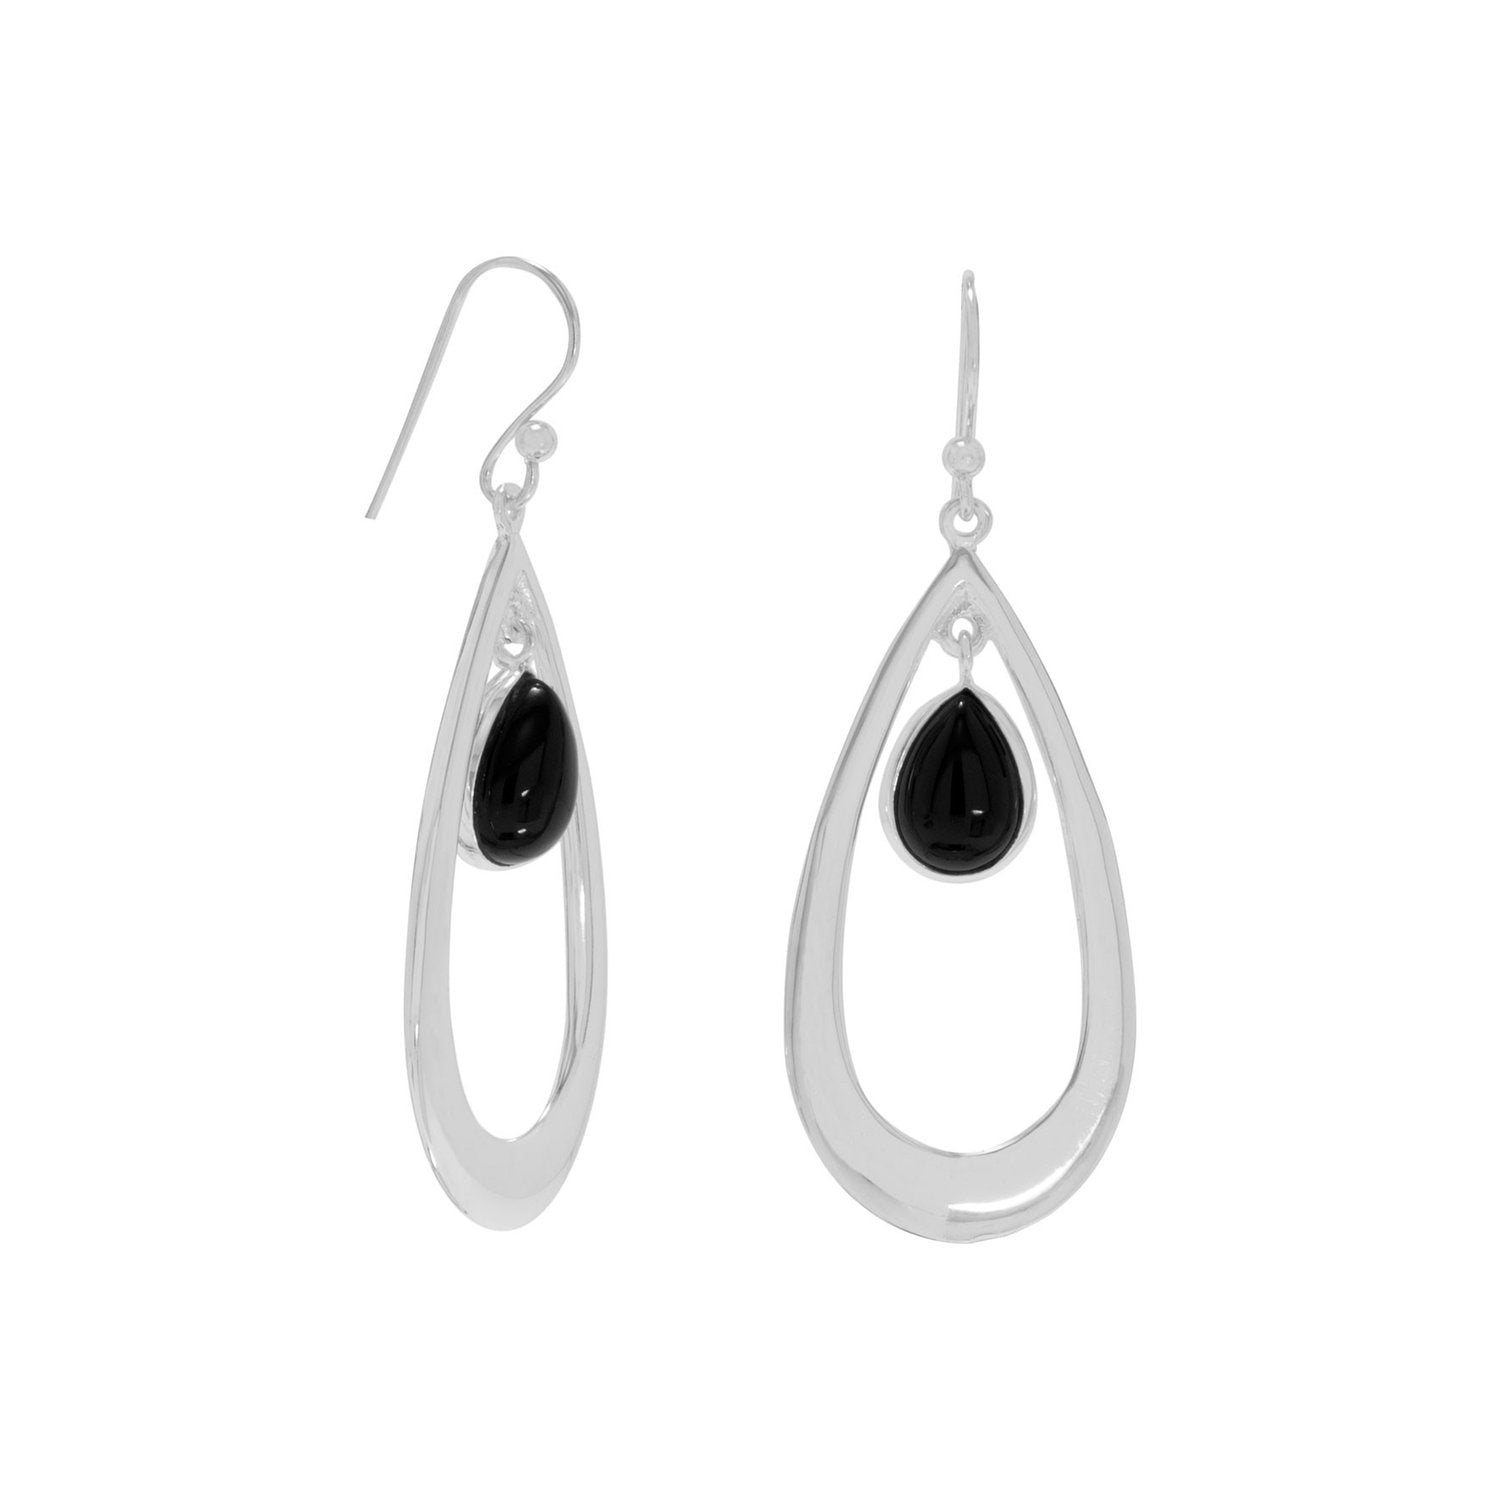 Polished French Wire Earrings with Black Onyx Drop - Joyeria Lady